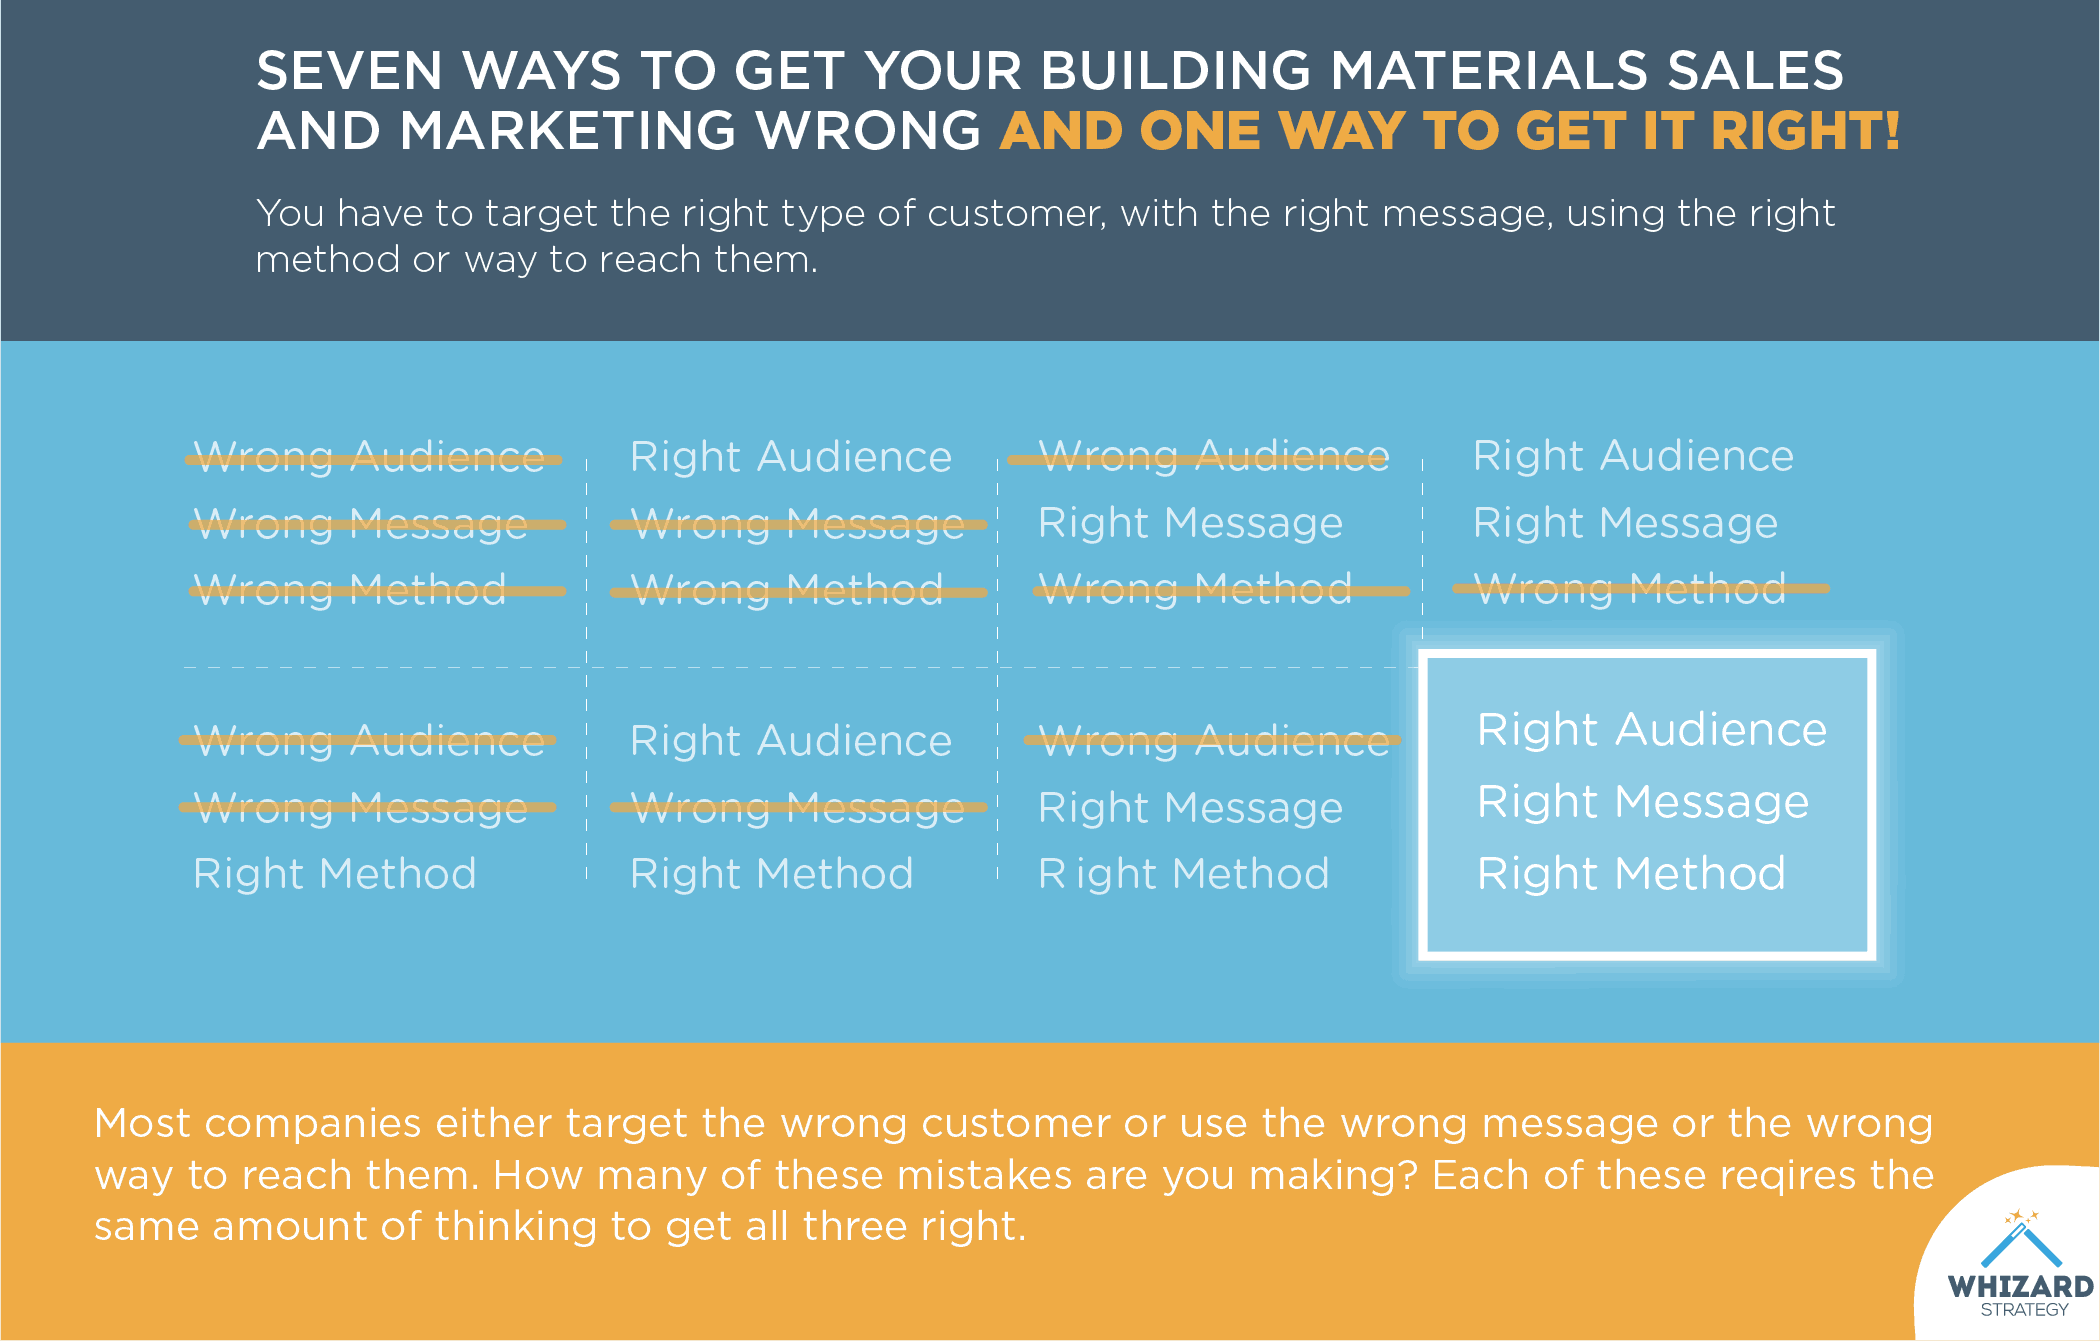 Building Materials Marketing